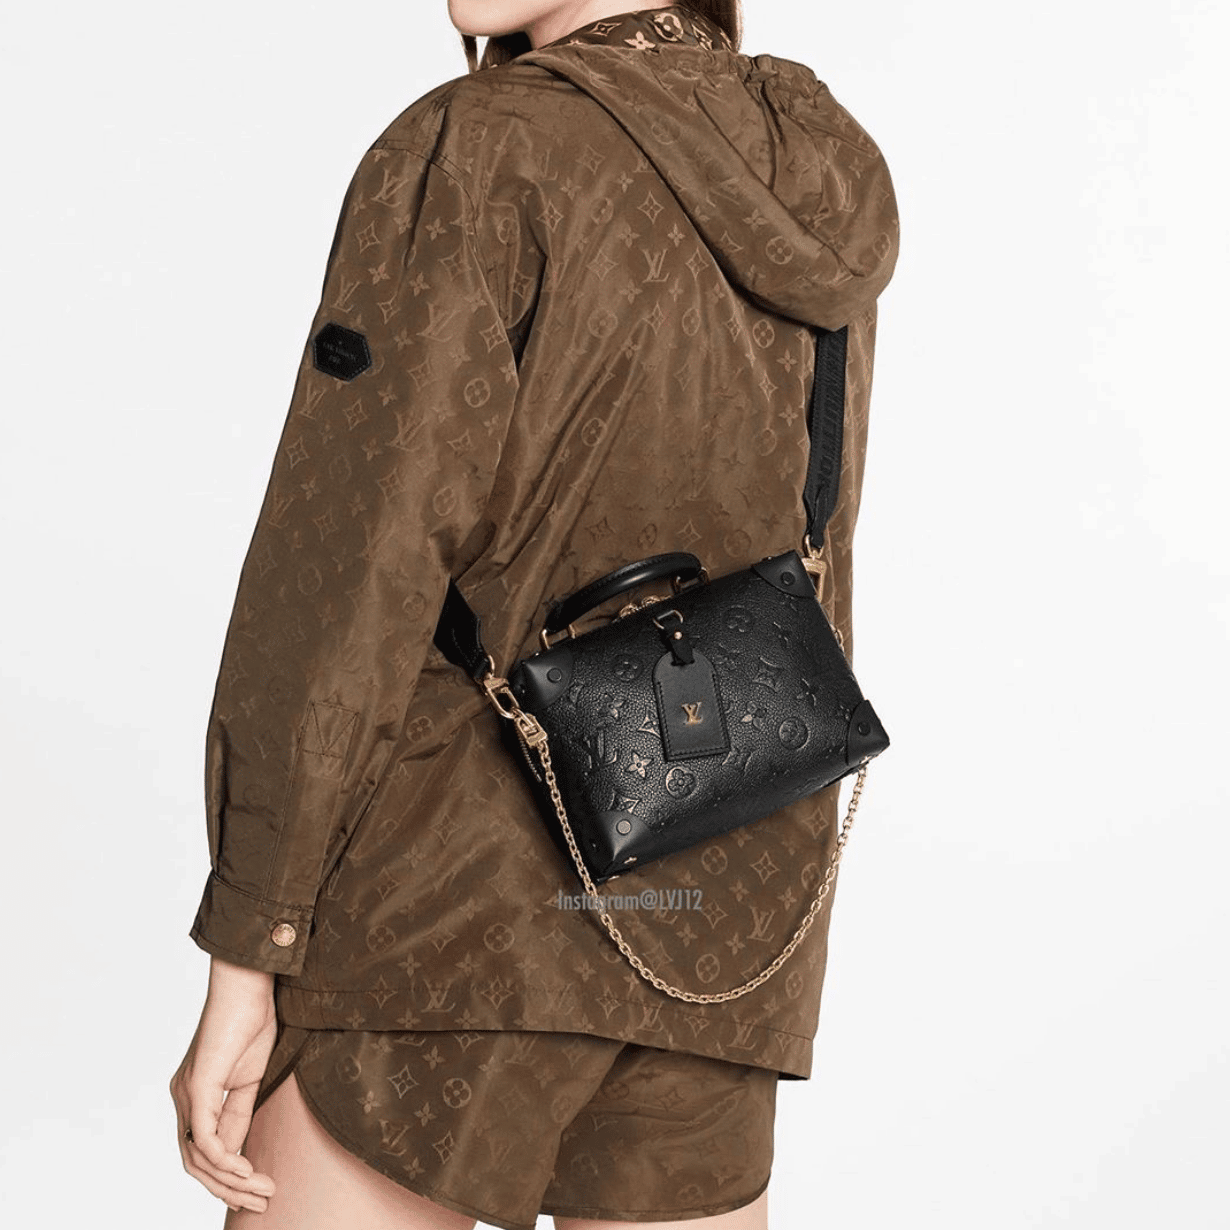 Louis Vuitton 2020 Petite Malle Souple Handbag